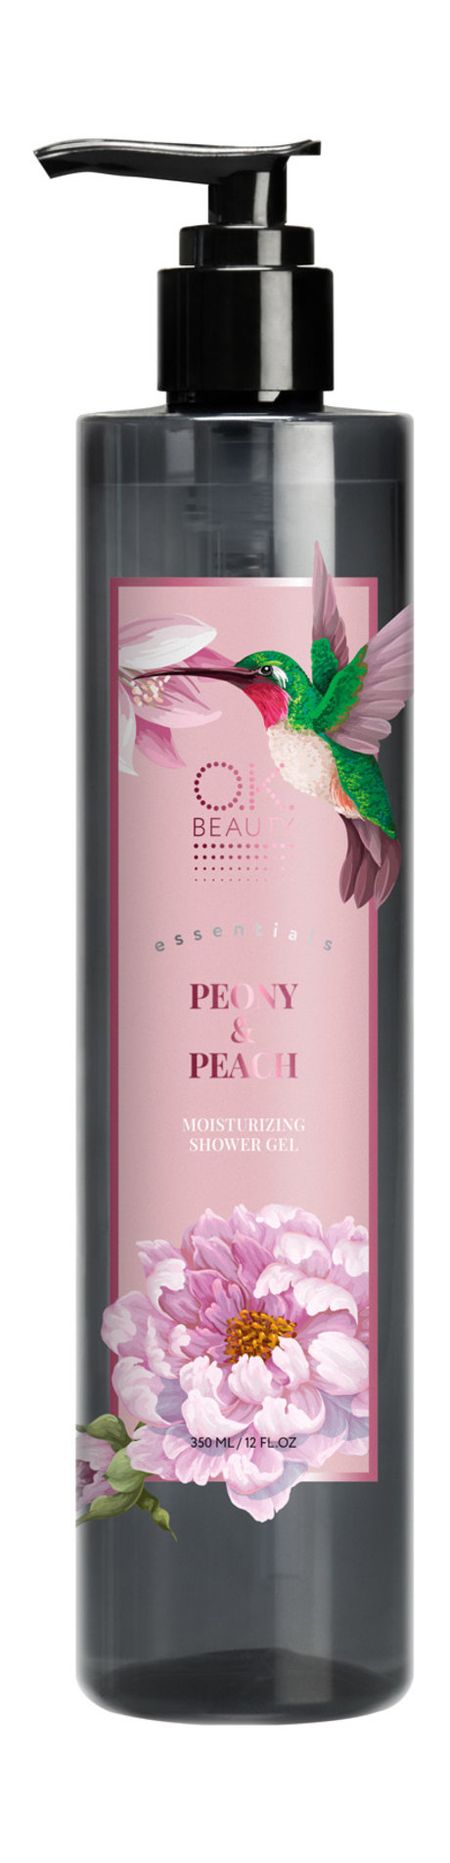 o.k.beauty essentials peony& peach moisturizing shower gel